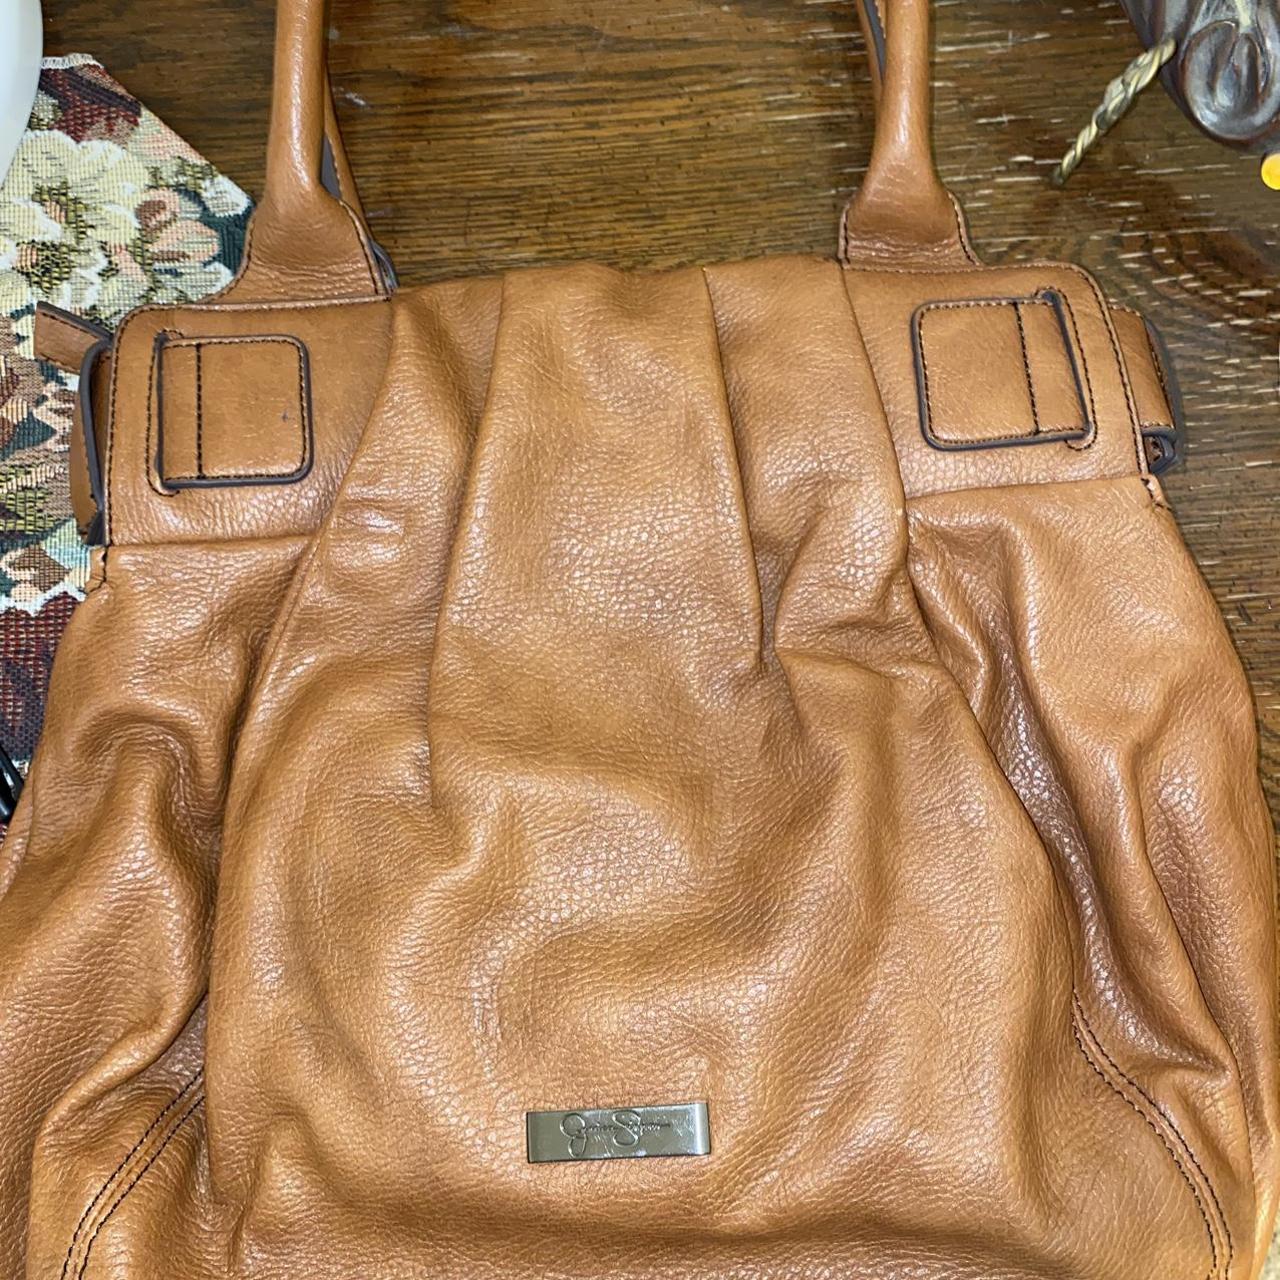 Jessica Simpson purse for women - Women's handbags